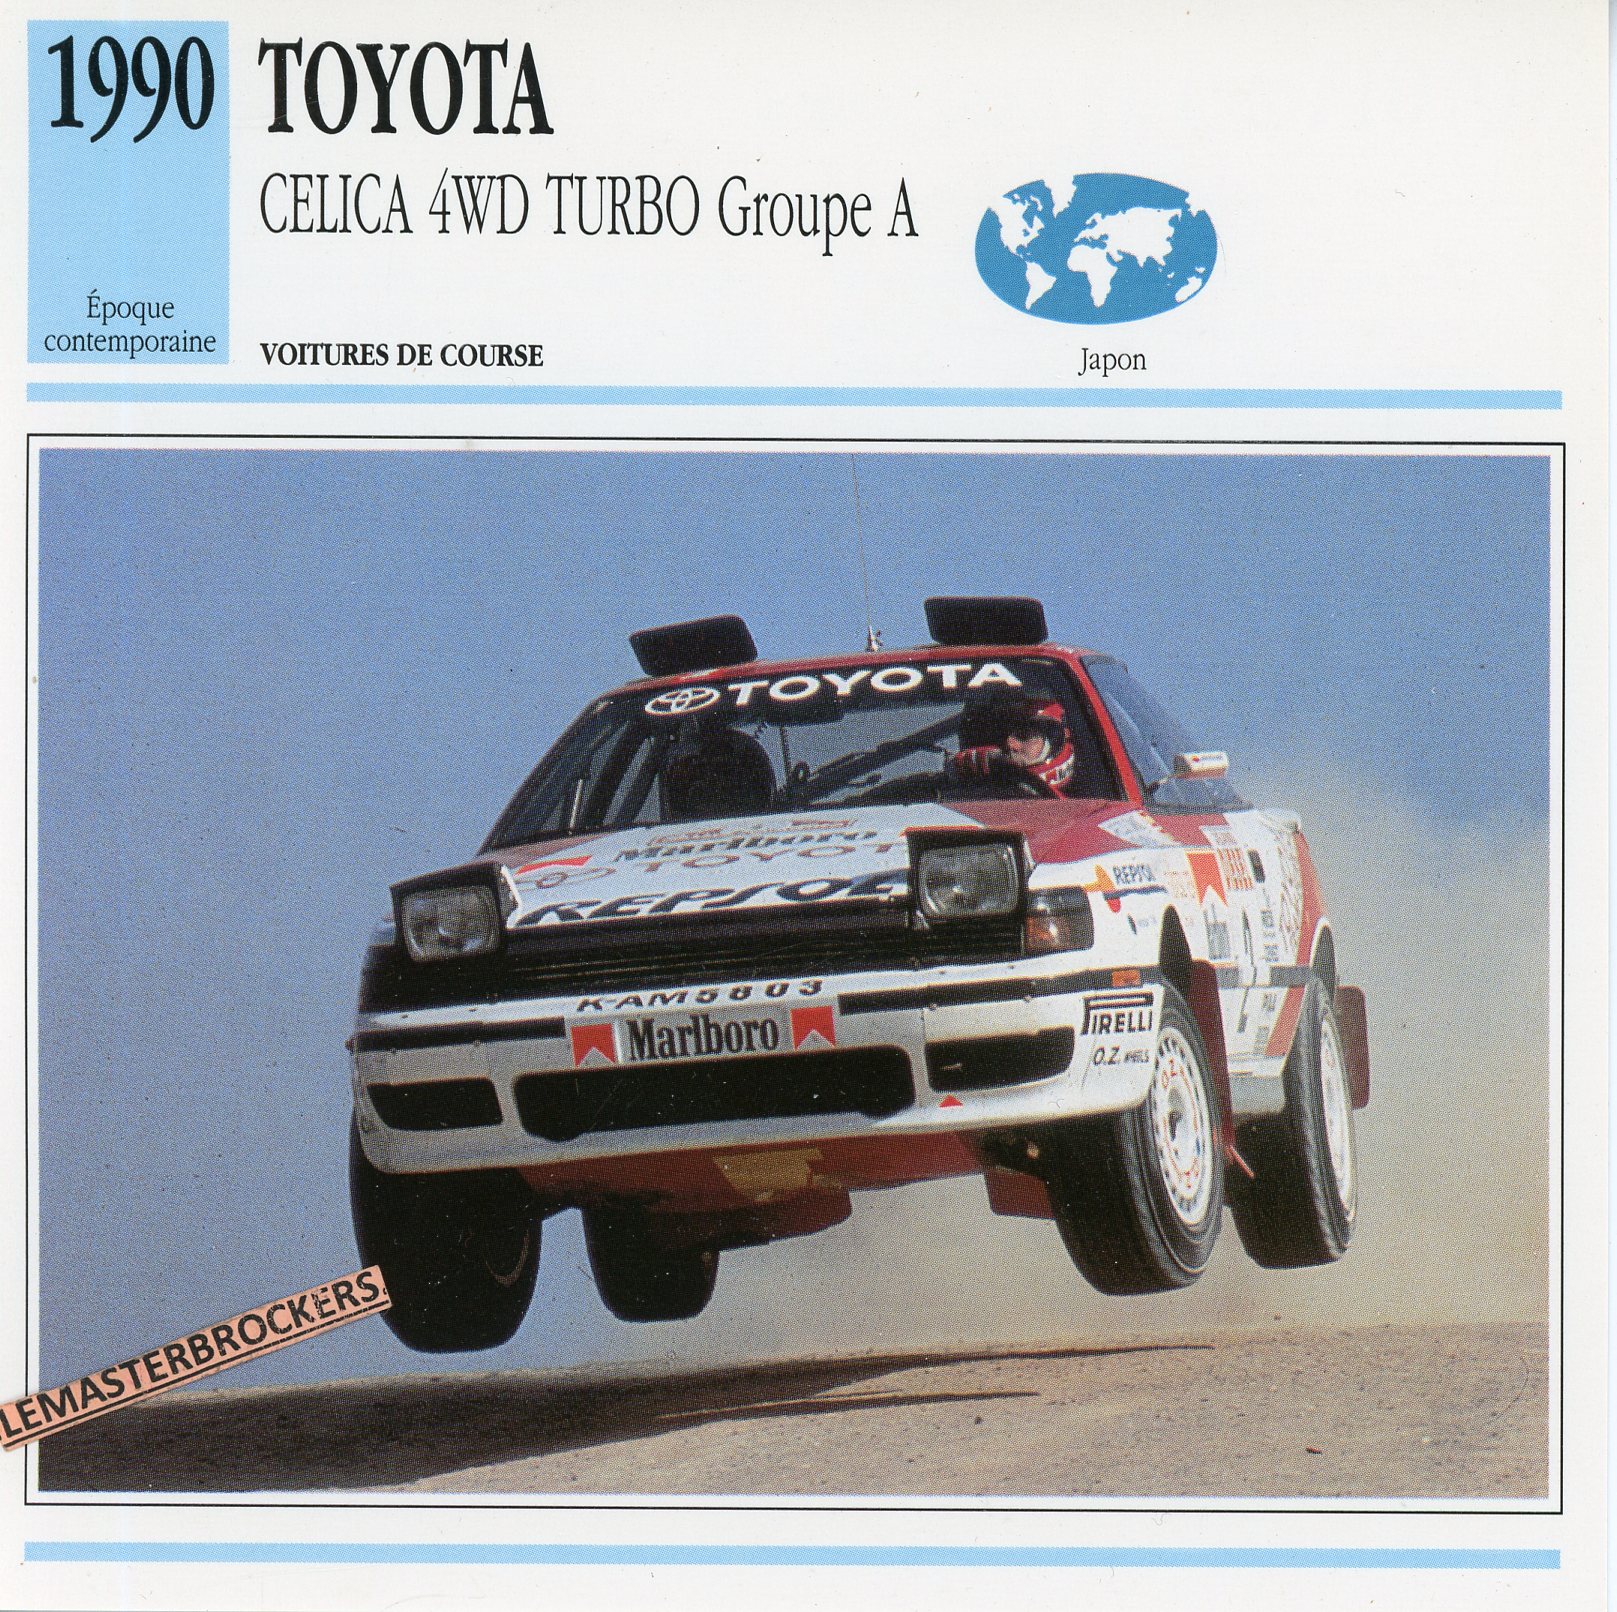 TOYOTA-CELICA-4WD-TURBO-1990-FICHE-AUTO-ATLAS-LEMASTERBROCKERS